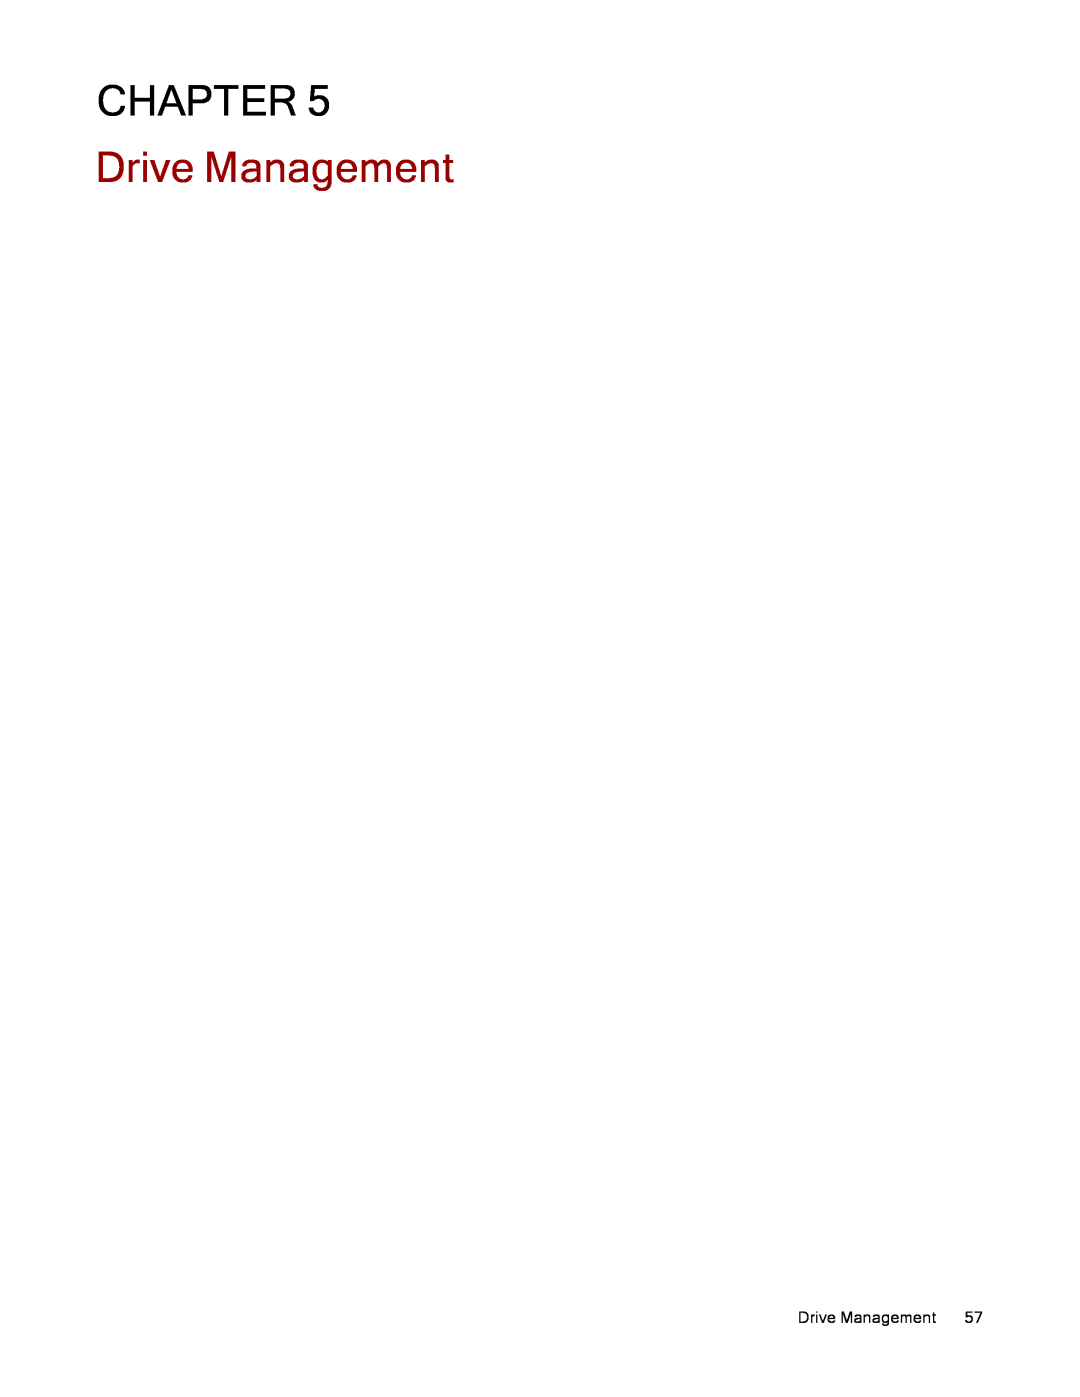 Lenovo 70BJ9005WW, 70BJ9007WW manual Drive Management, Chapter 